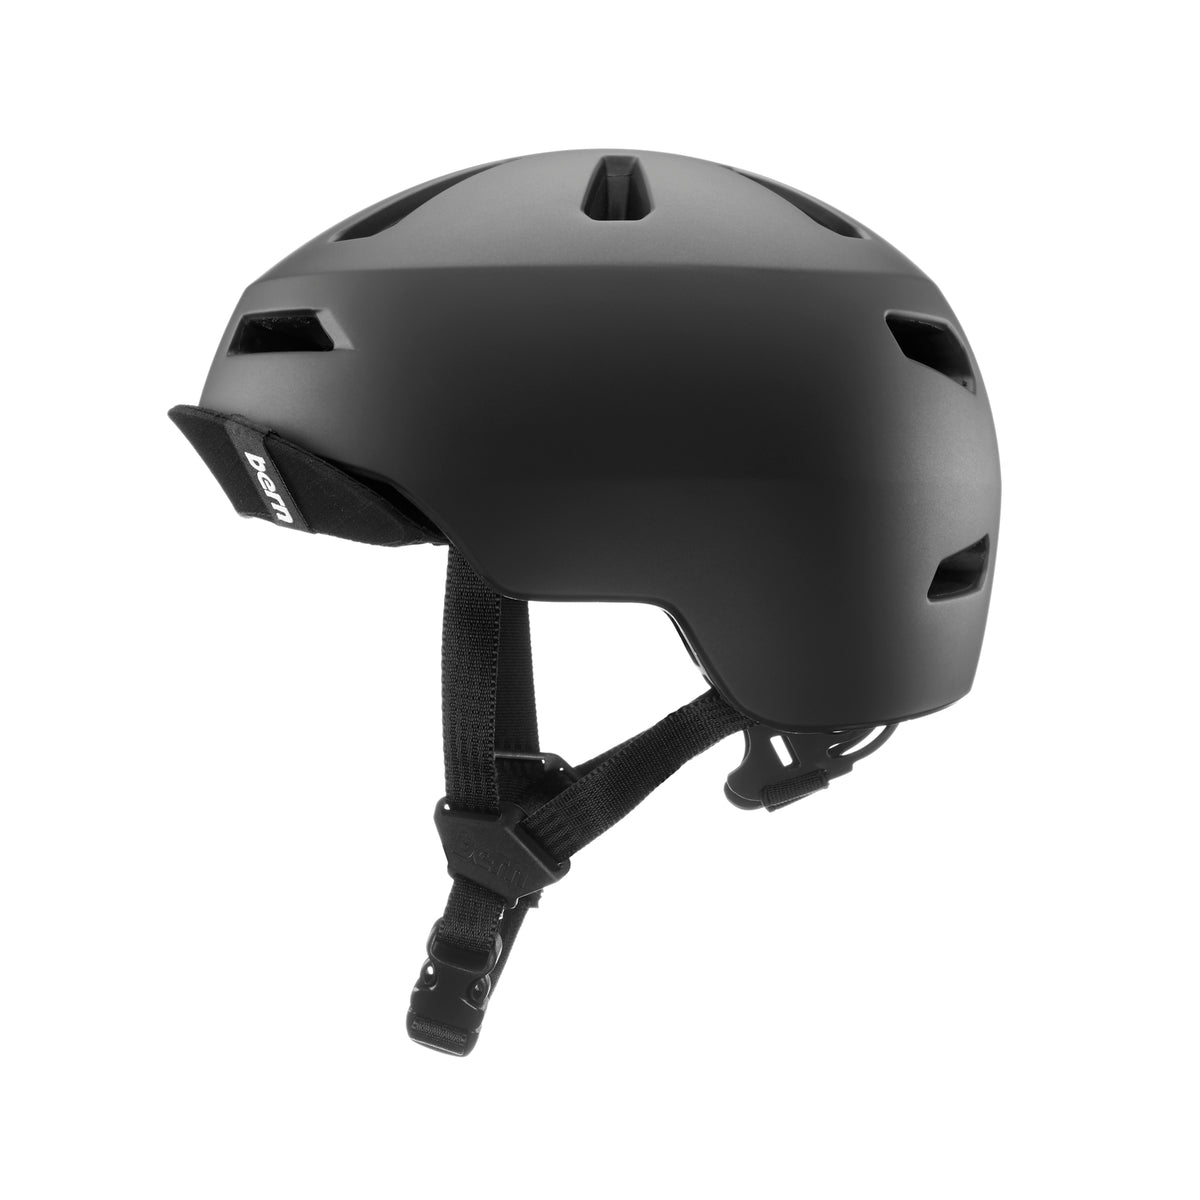 Nino 2.0 MIPS Bern Helmet